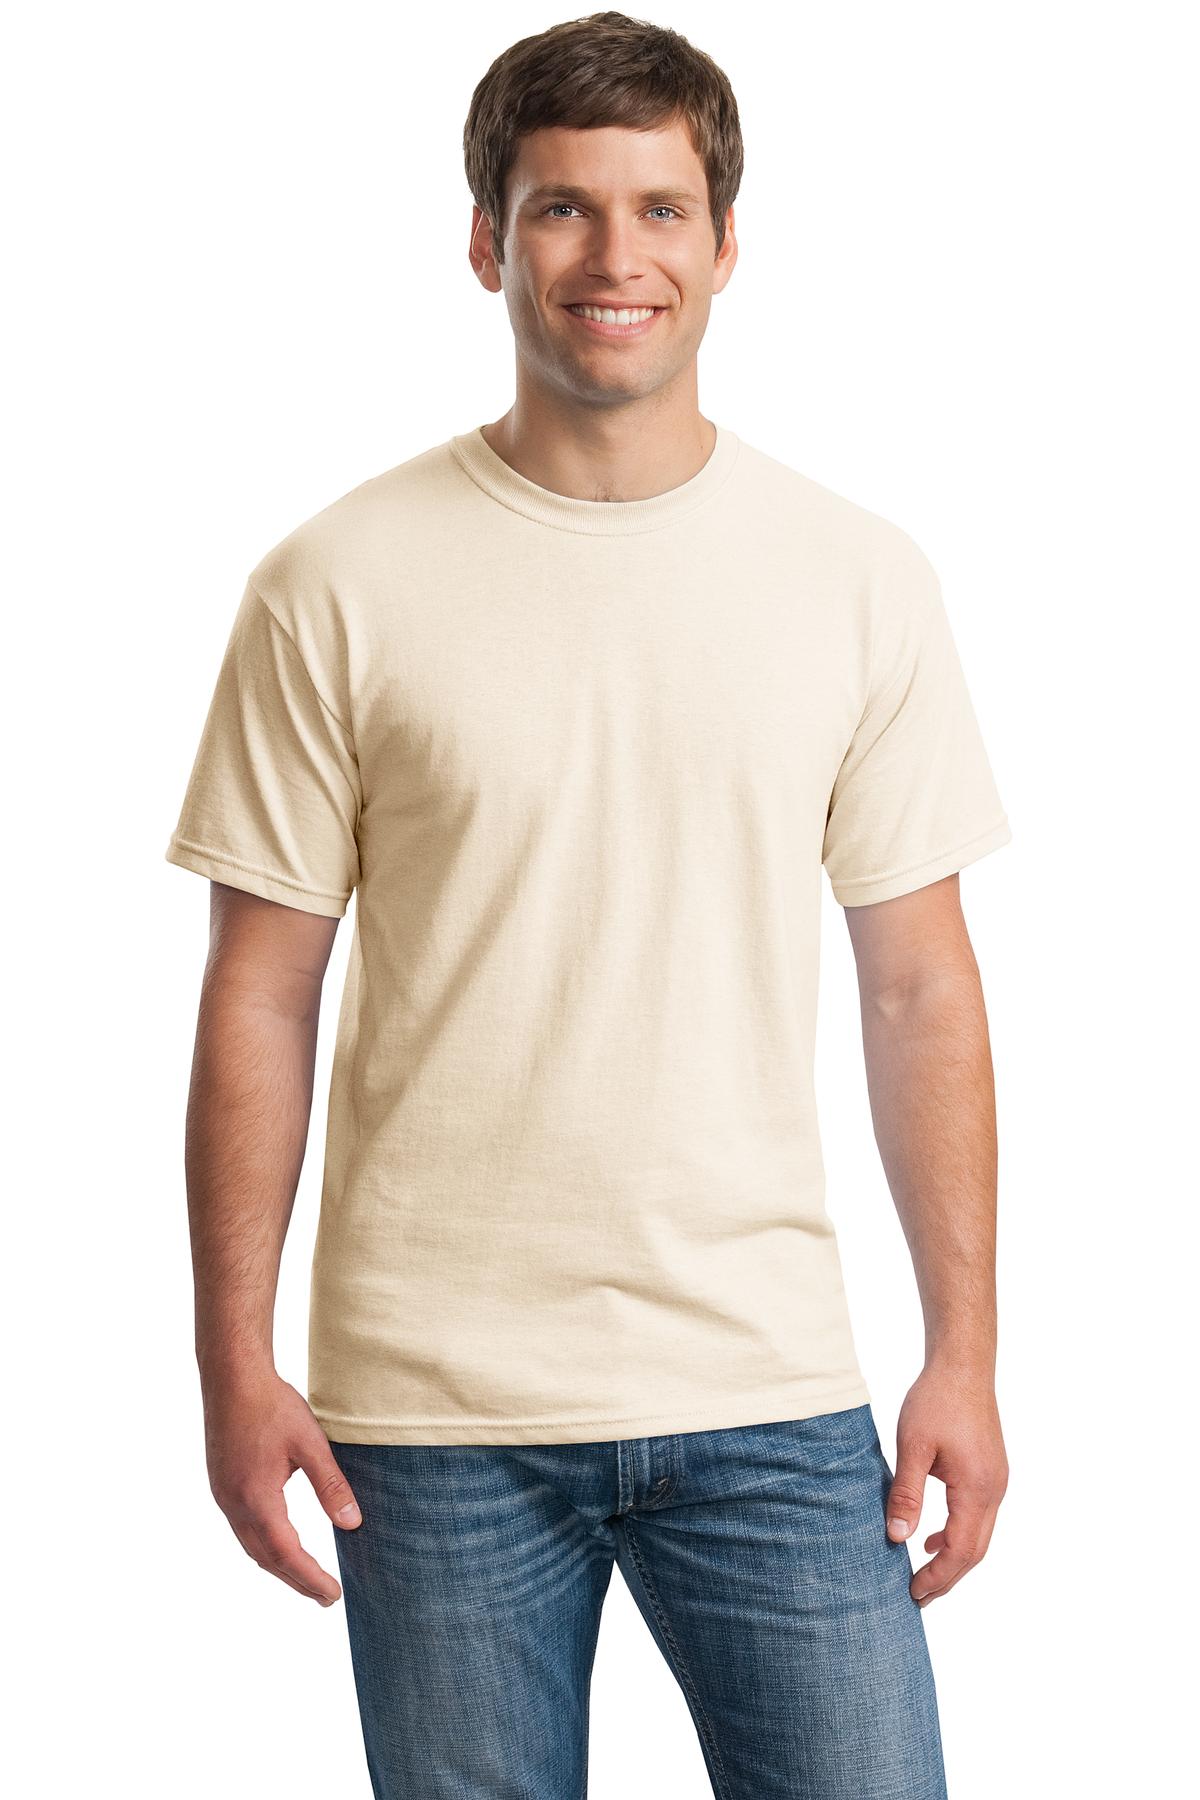 Gildan   - Heavy Cotton   100% Cotton T-Shirt.  5000 (Pack of 6)